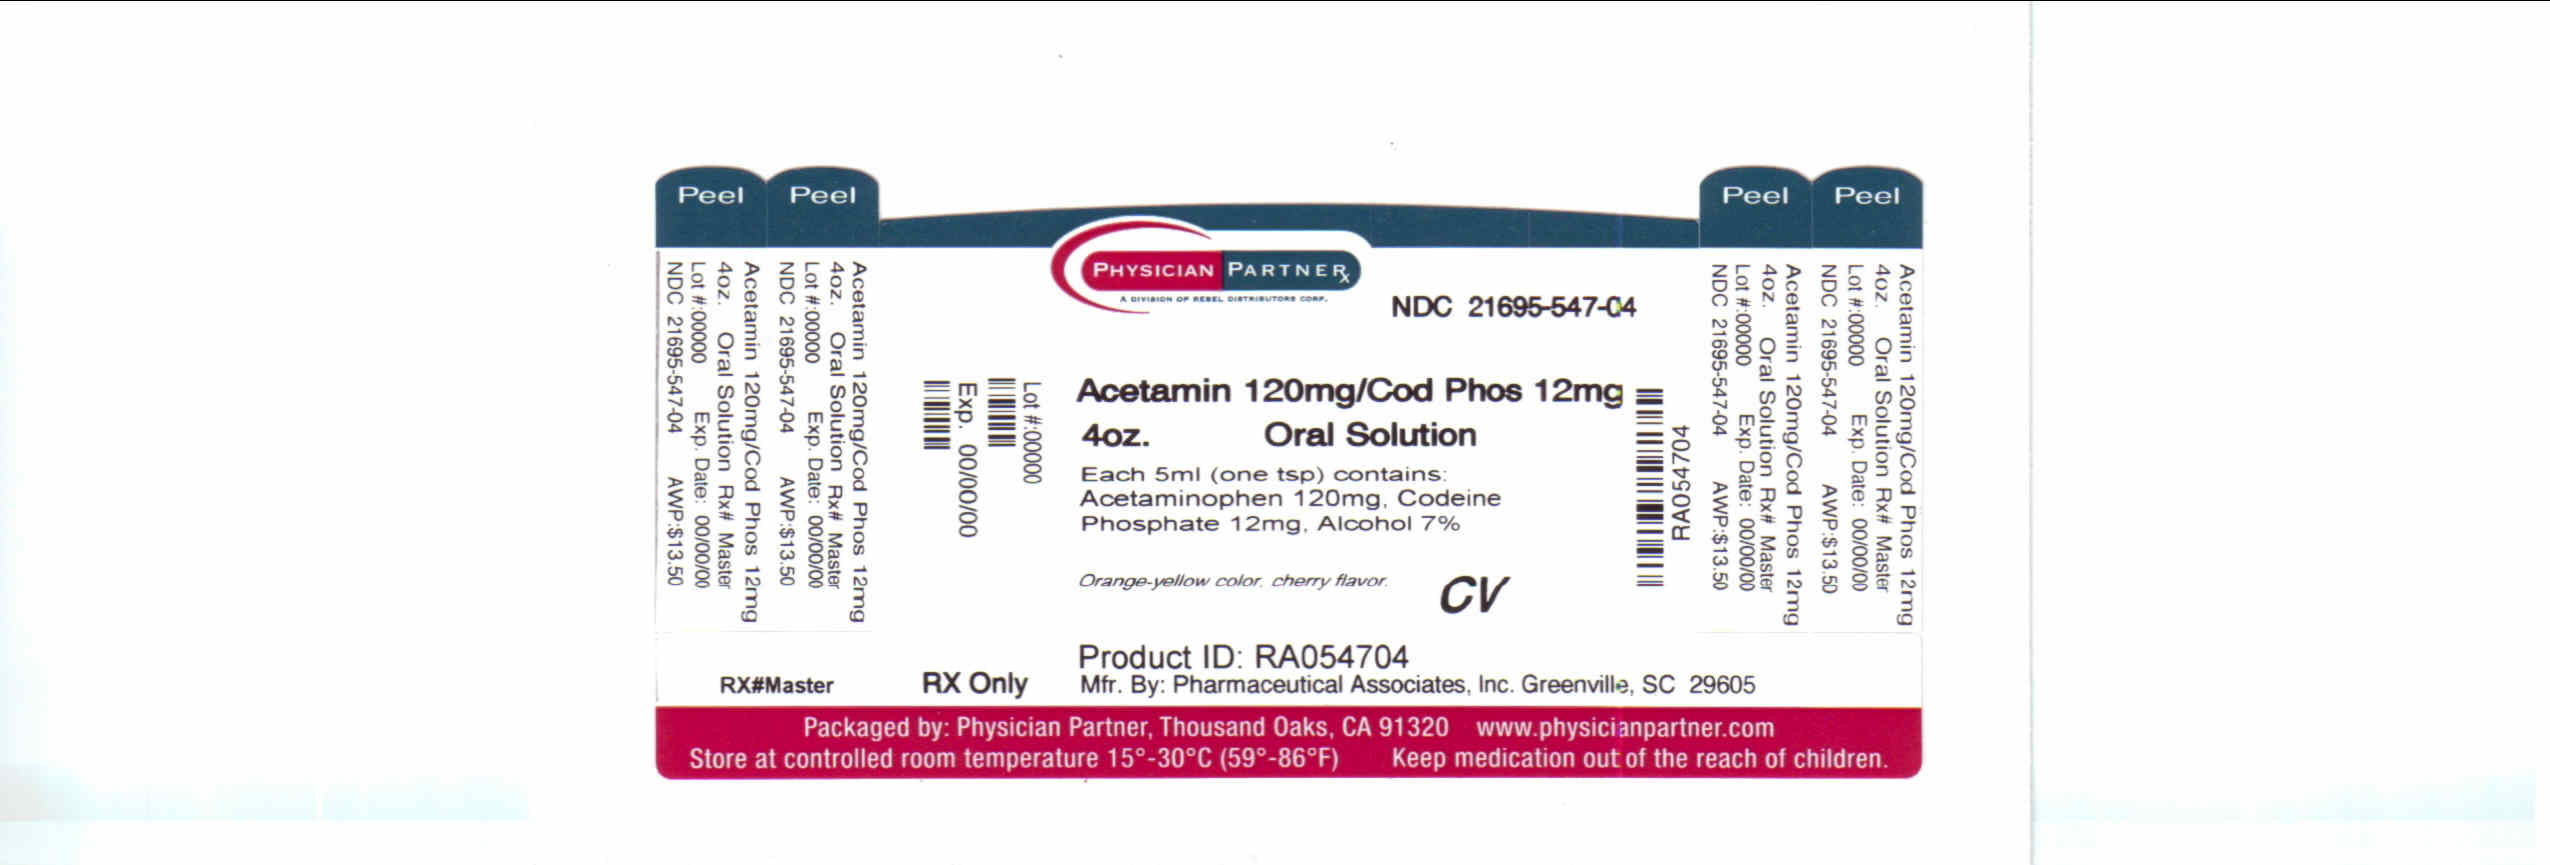 Acet 120mg/Cod Phos 12mg Label